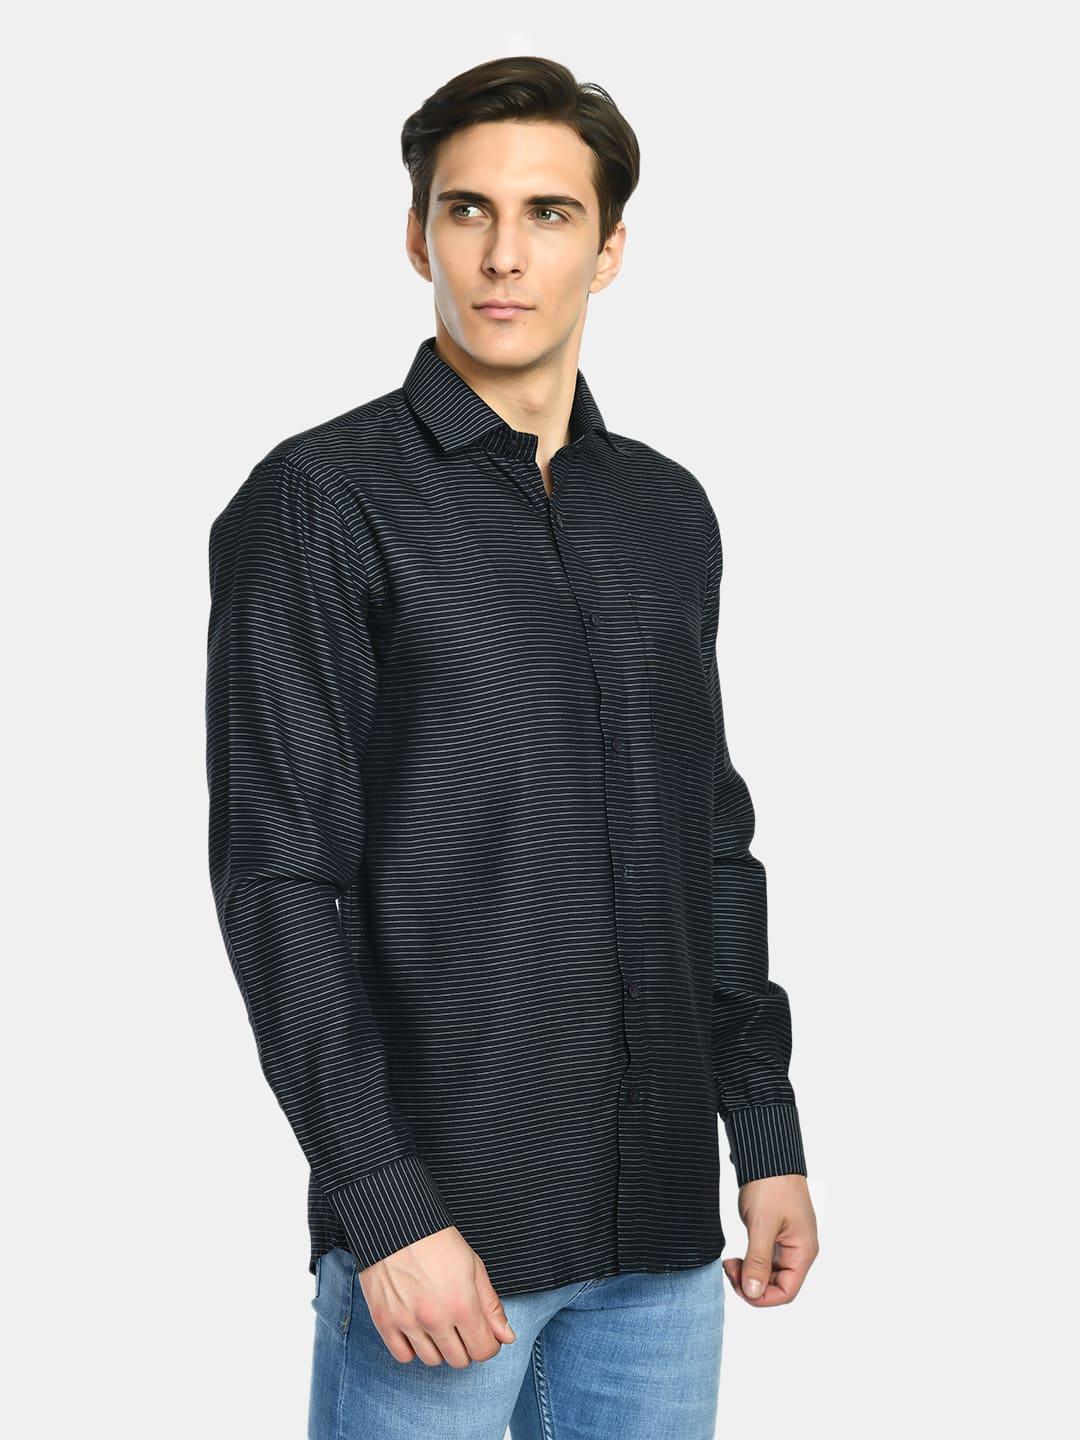 Men's Navy Stripes Cotton Regular Fit Shirt